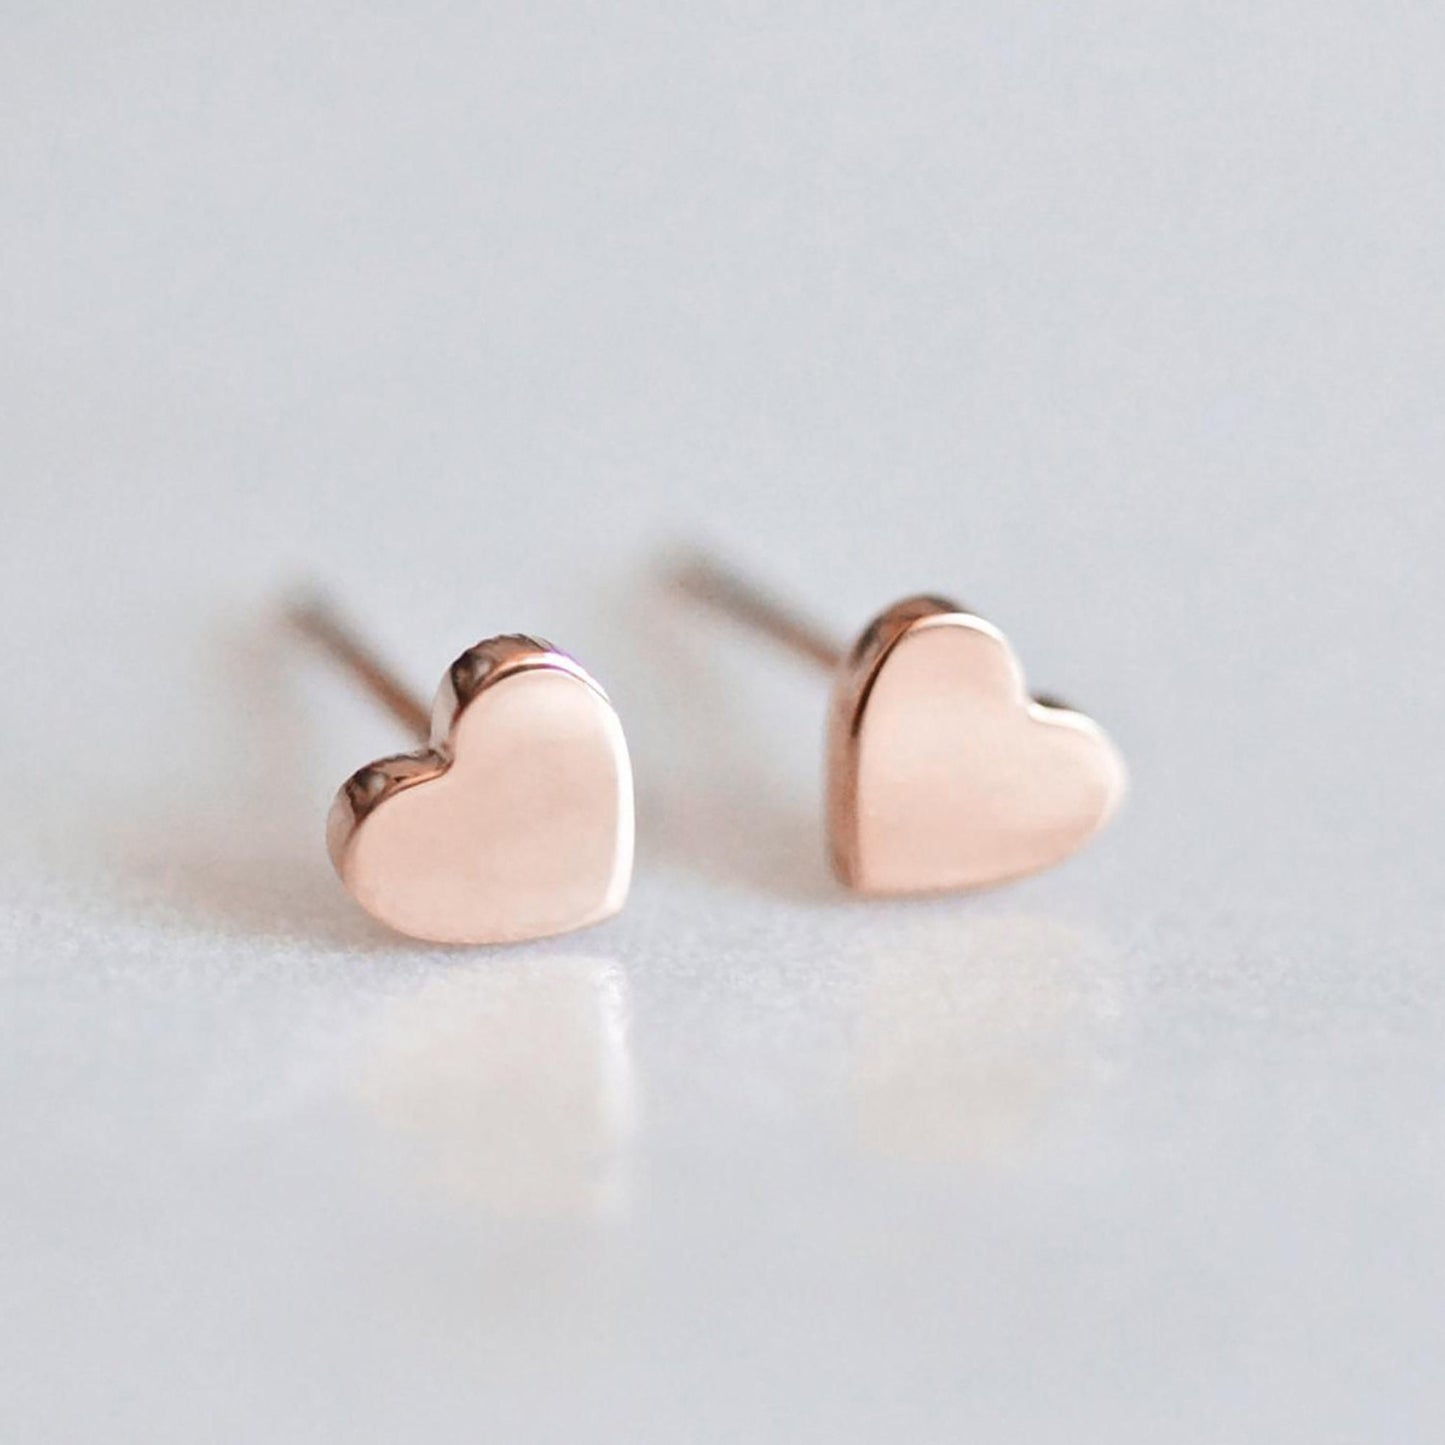 Titanium Heart Tiny Stud Earrings, Non Tarnish Earrings, Implant Grade Titanium Waterproof Earrings, Vintage Earrings, Minimal Earrings